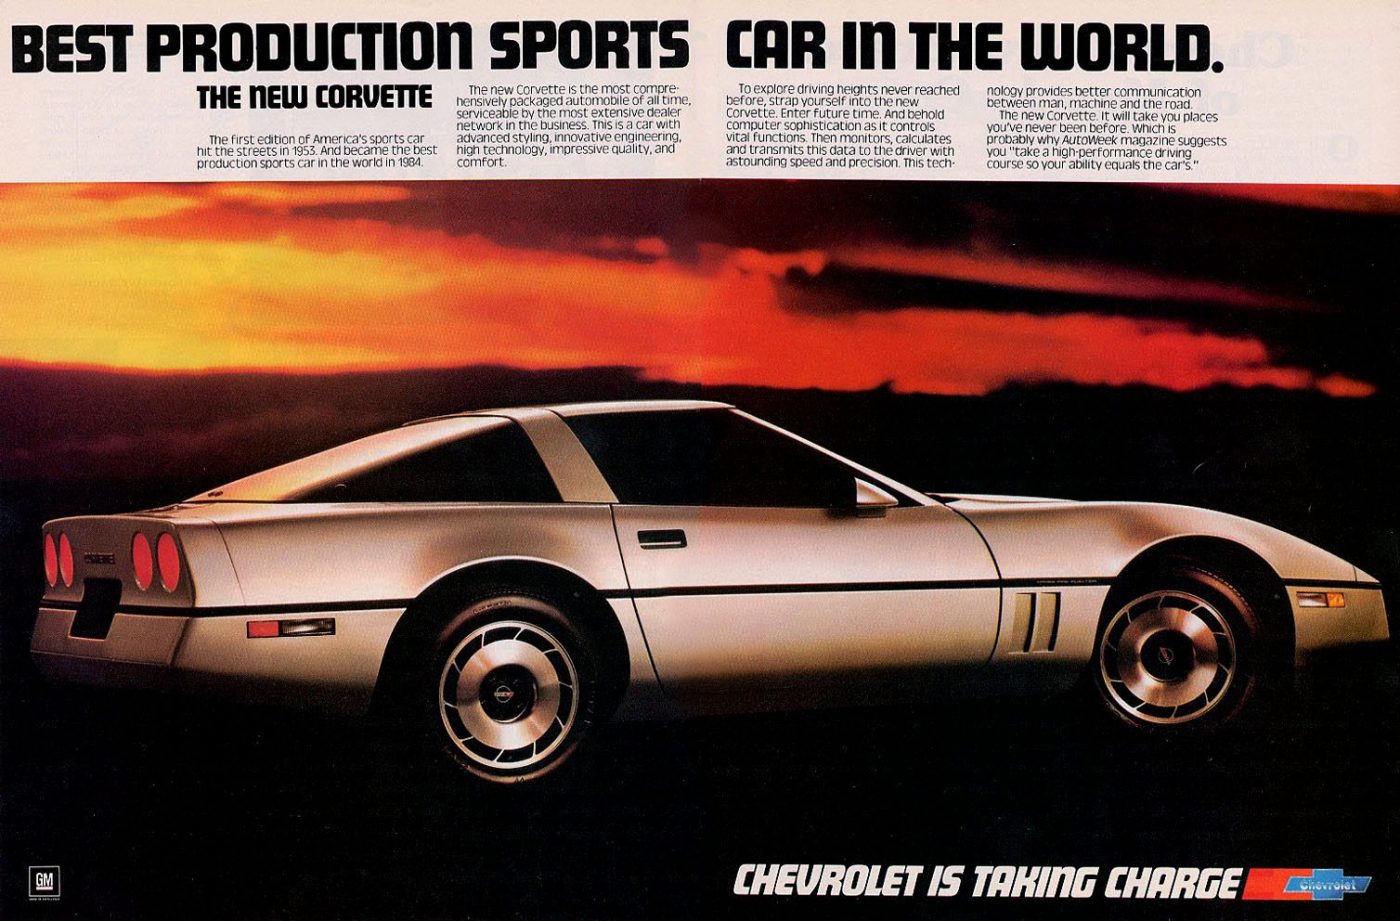 1984 C4 Corvette | Image Gallery & Pictures